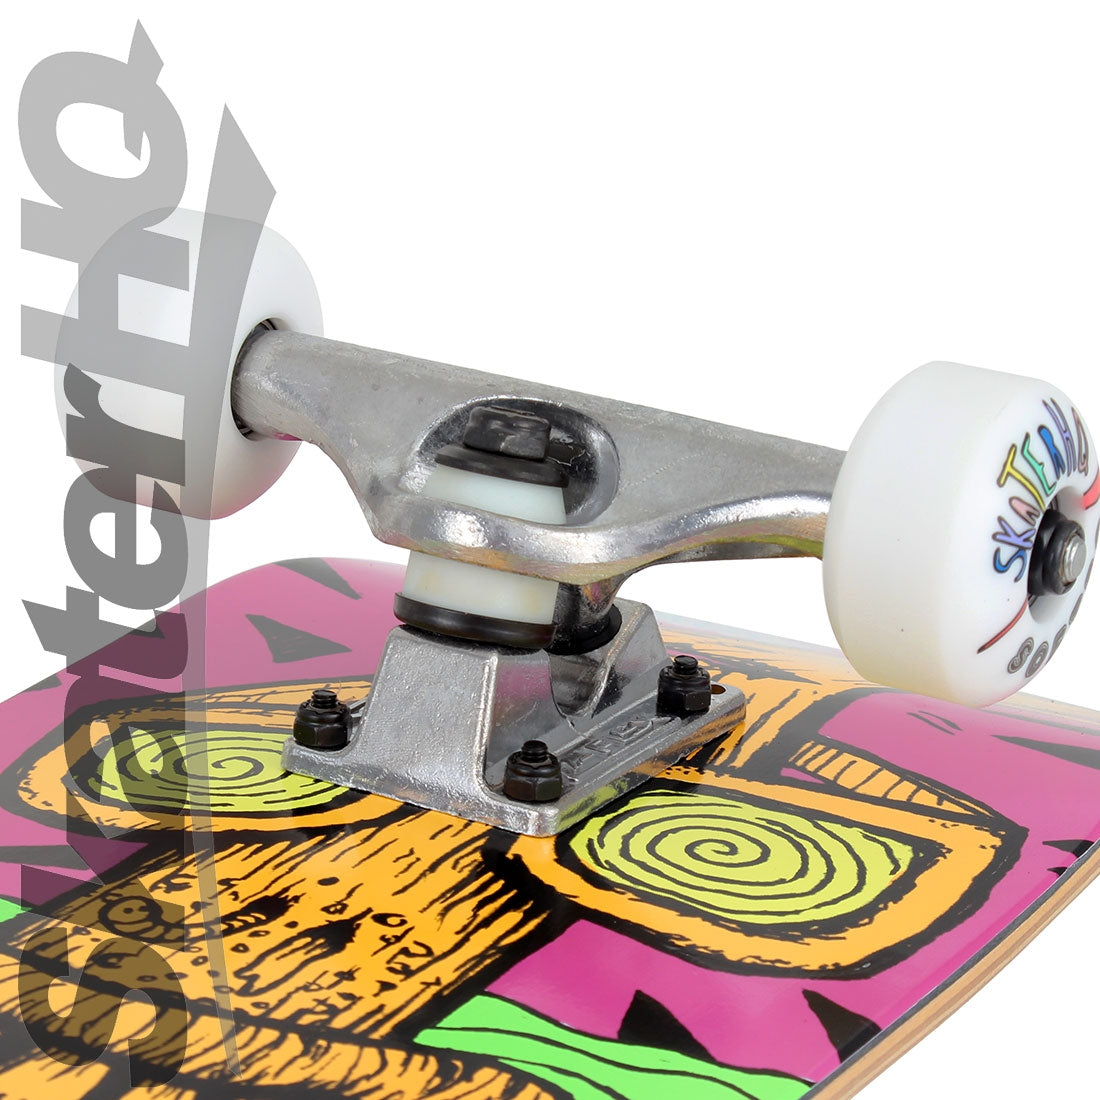 Skater HQ Ugly Stick 7.25 Mini S Complete Skateboard Completes Modern Street